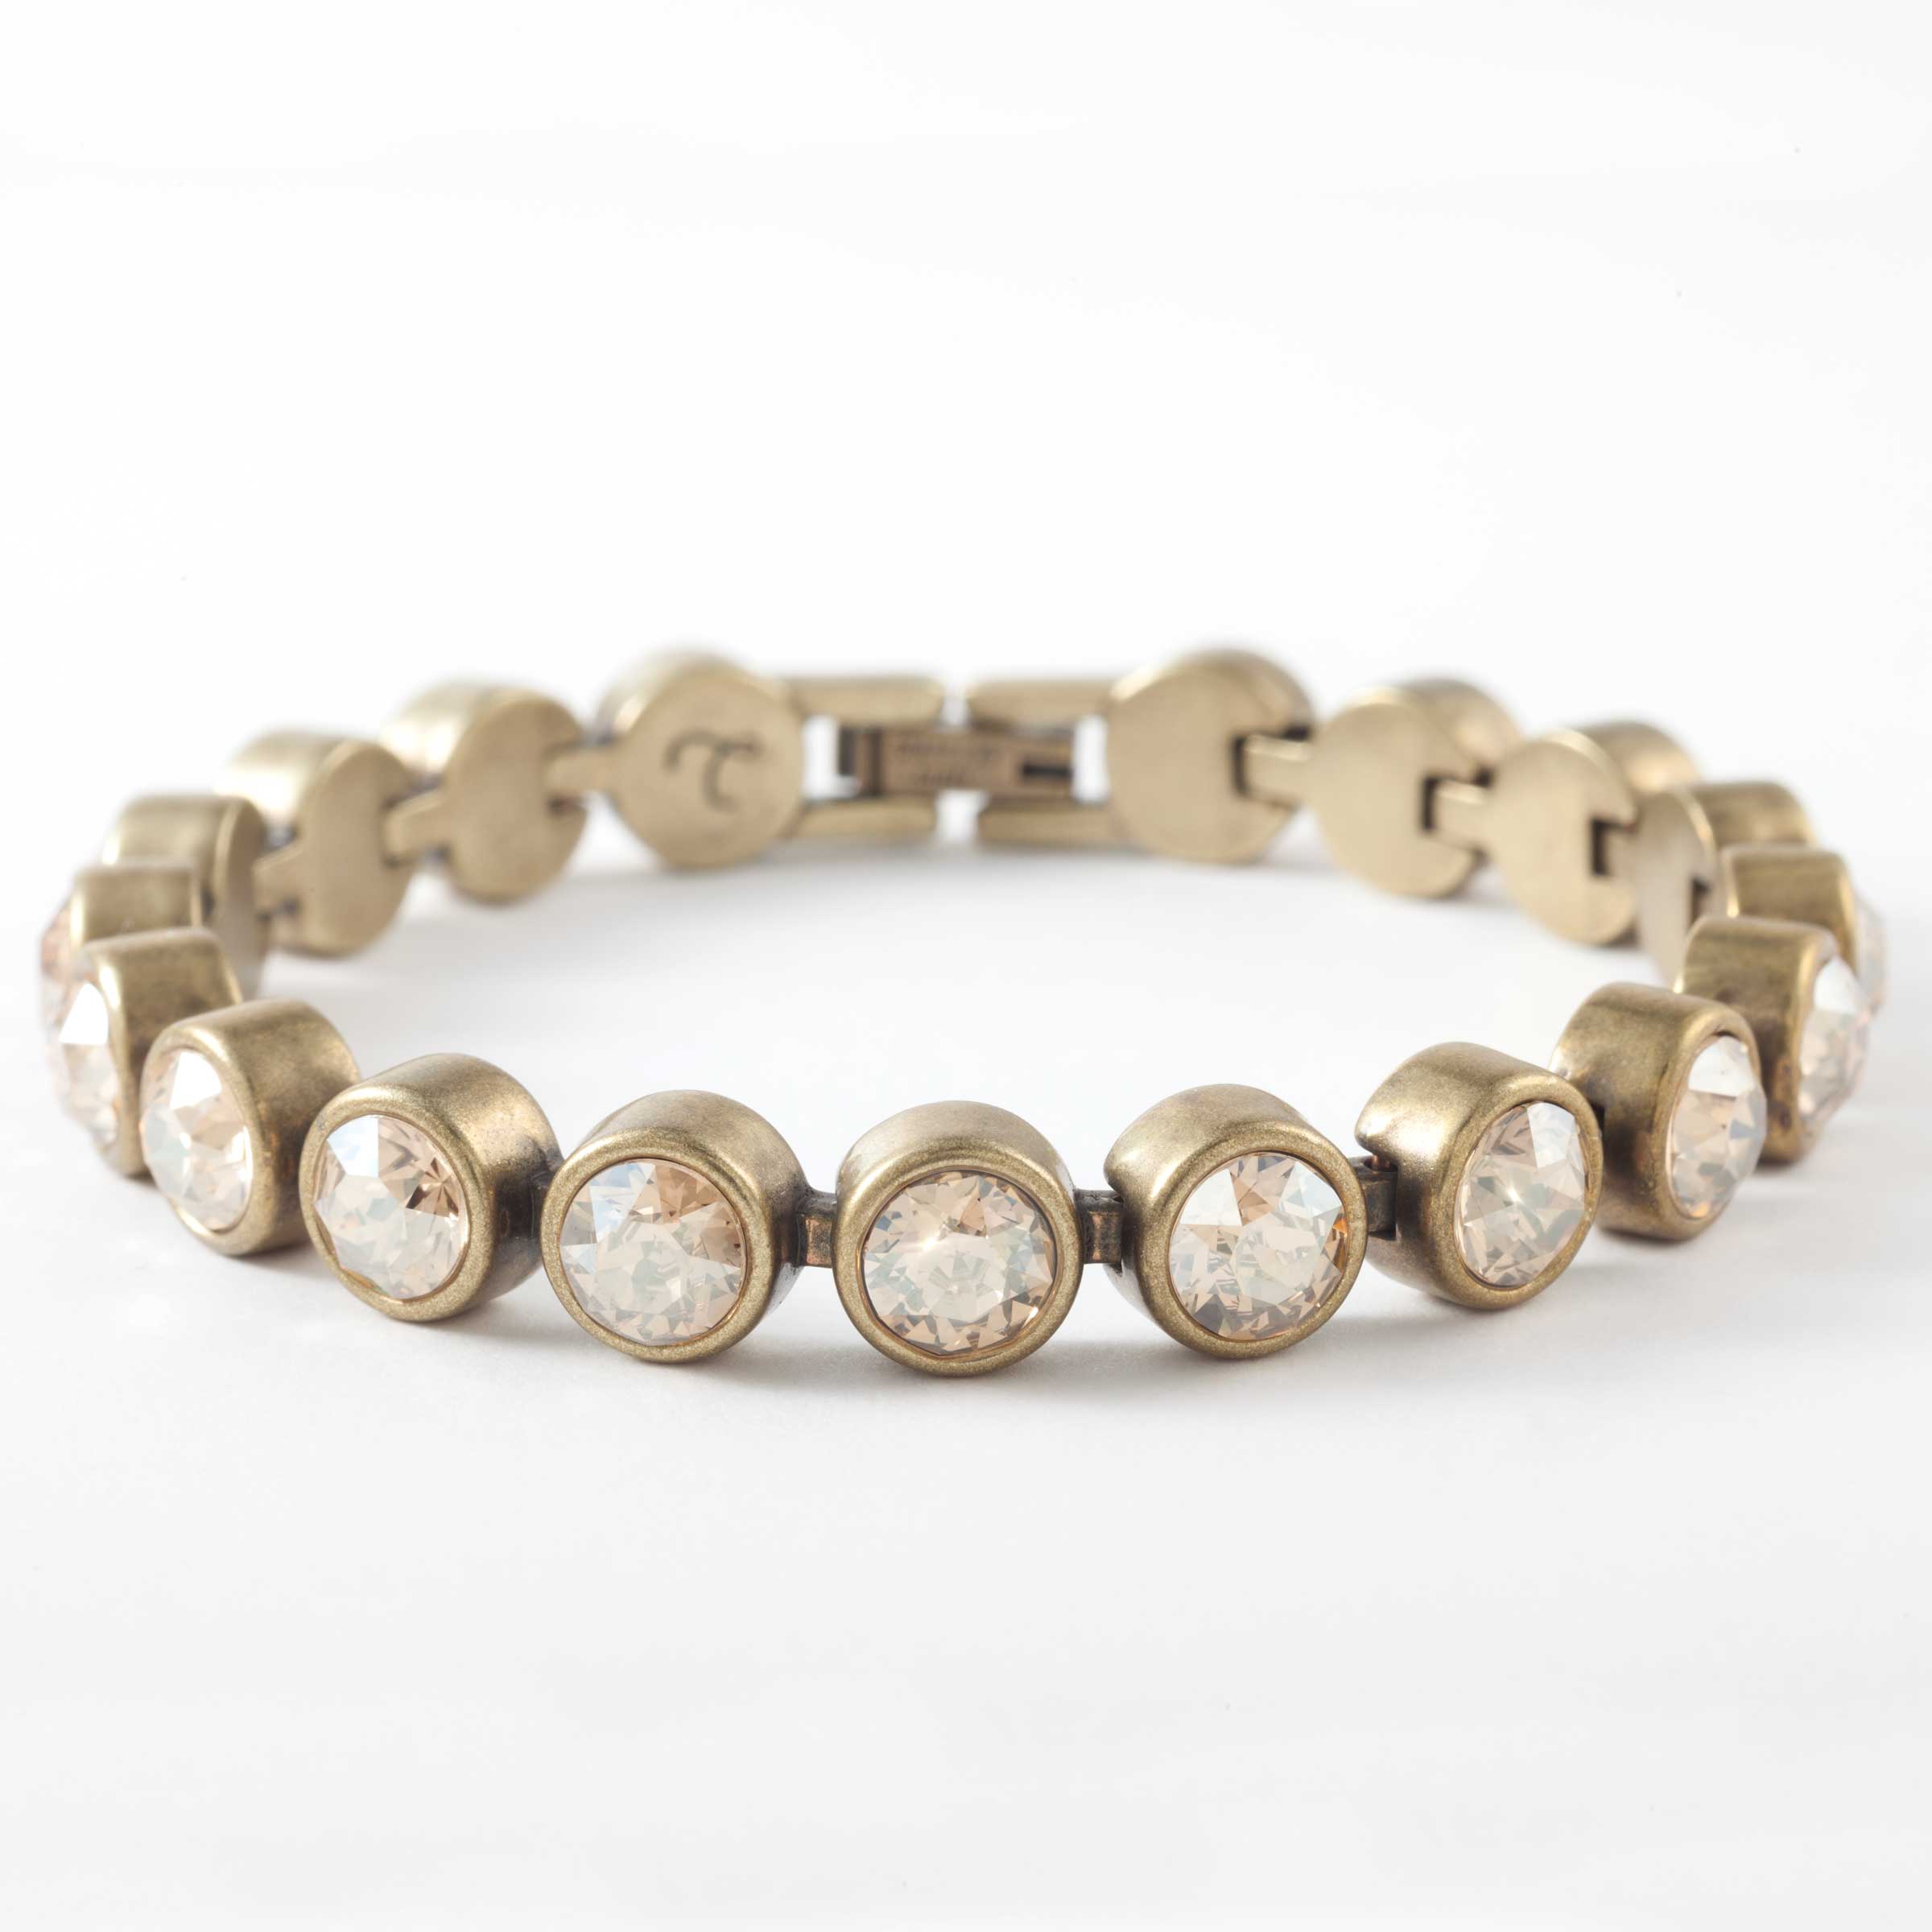 Bloodhound Jewelry Gold Bracelet by Touchstone 